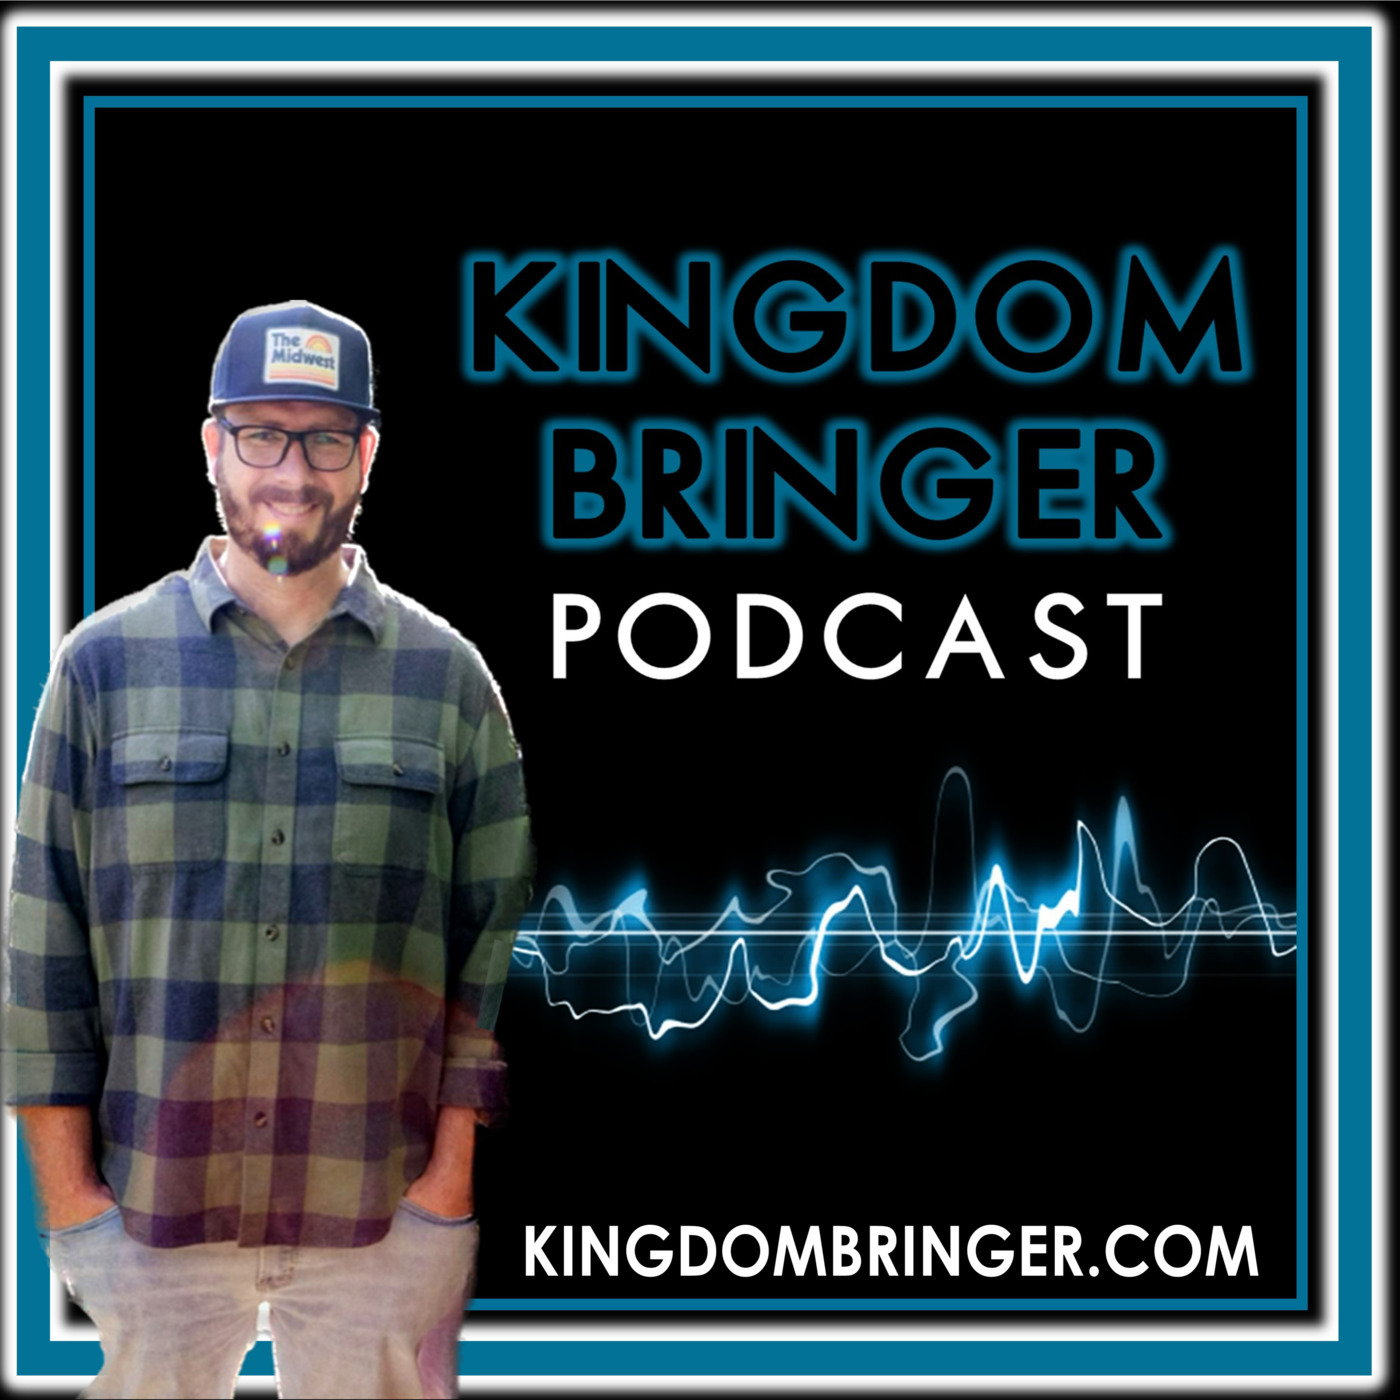 The Kingdom Bringer Podcast